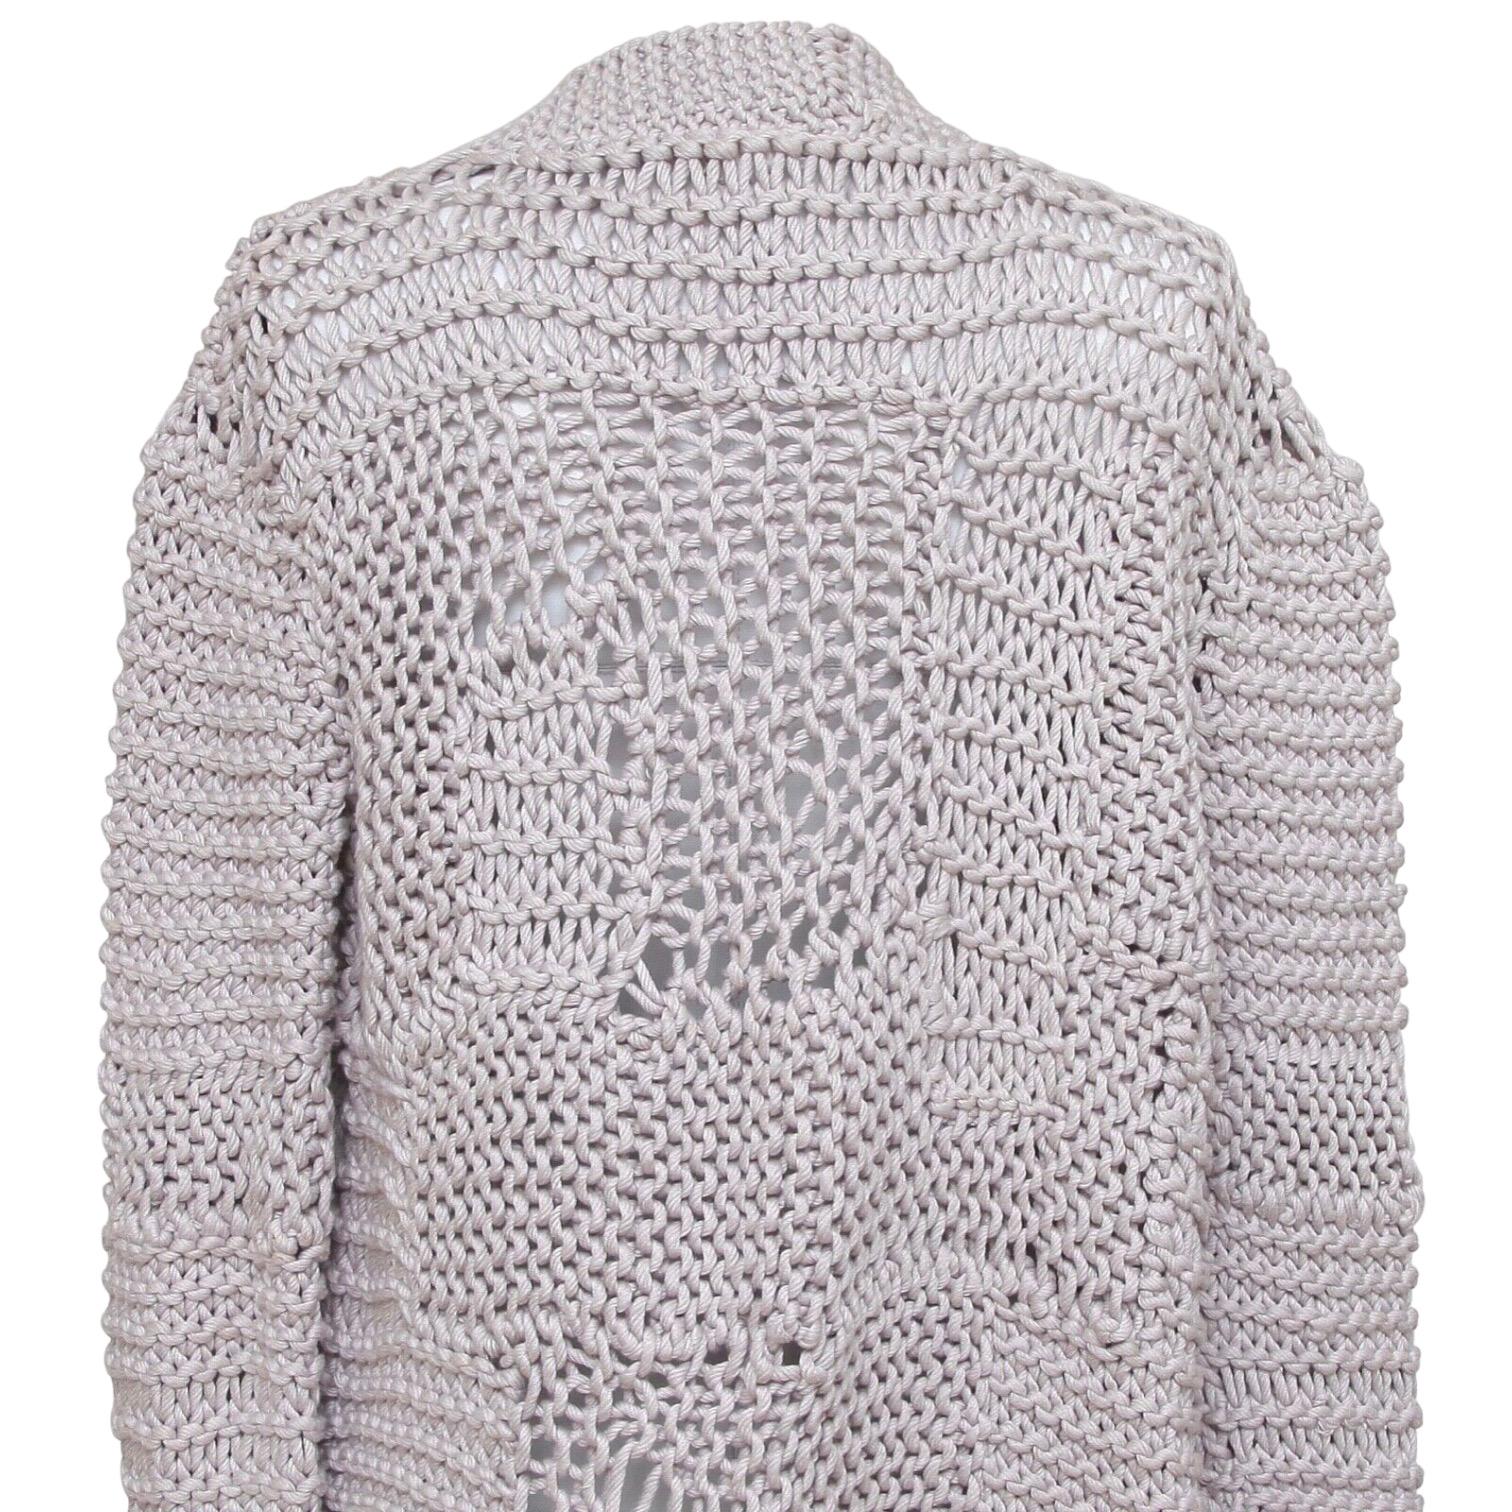 CHLOE Cardigan Sweater Knit Grey Lavender Open Front Long Sleeve Sz S 2008 For Sale 3